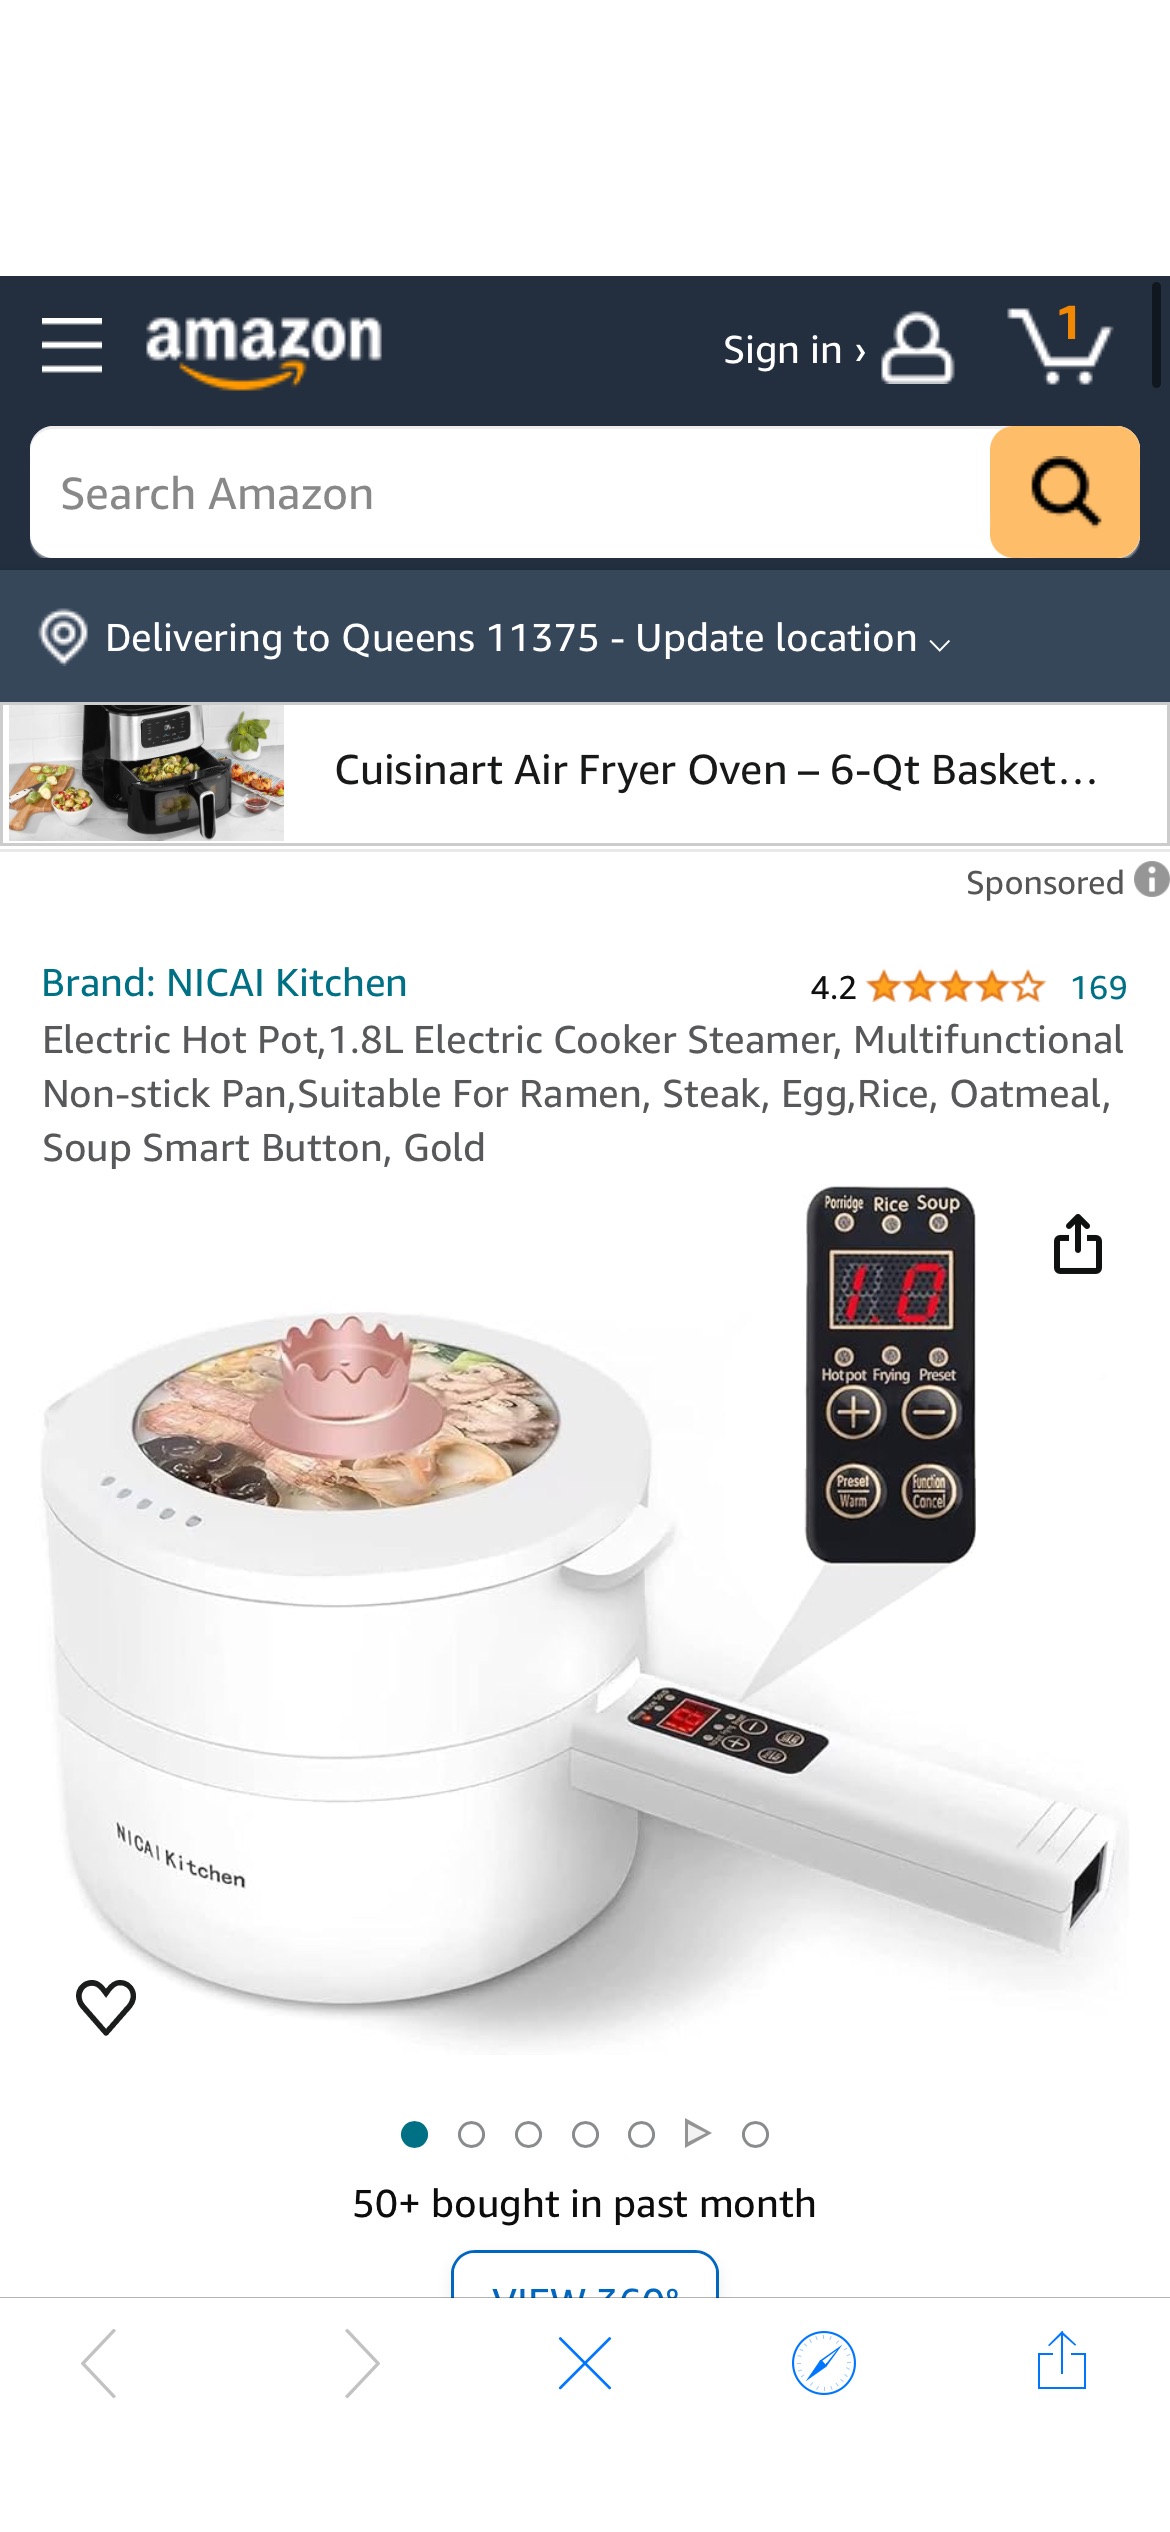 Amazon.com: NICAI Kitchen Electric Hot Pot,1.8L Electric Cooker Steamer, Multifunctional Non-stick Pan,Suitable For Ramen, Steak, Egg,Rice, Oatmeal, Soup Smart Button, Gold: Home & Kitchen